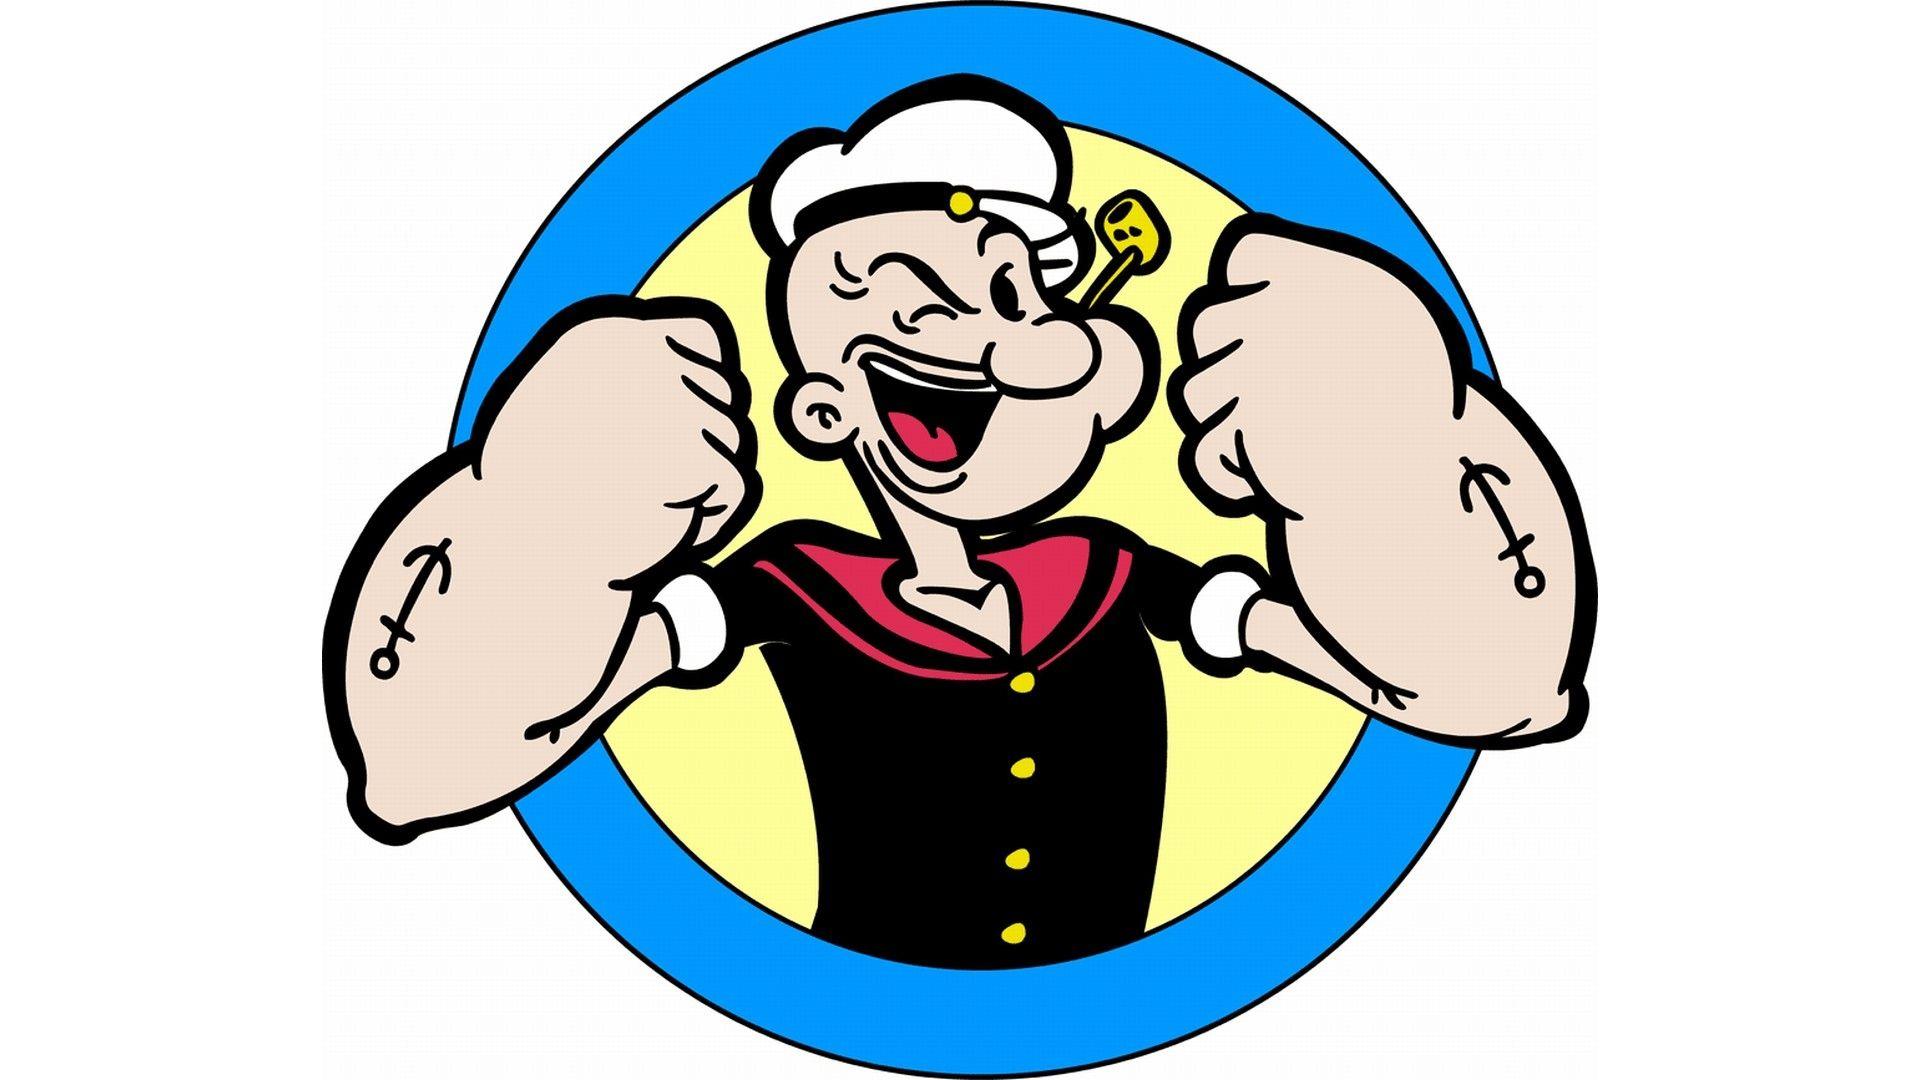 Download Popeye Wallpaper Full HD High Quality Desktop Sailor Man